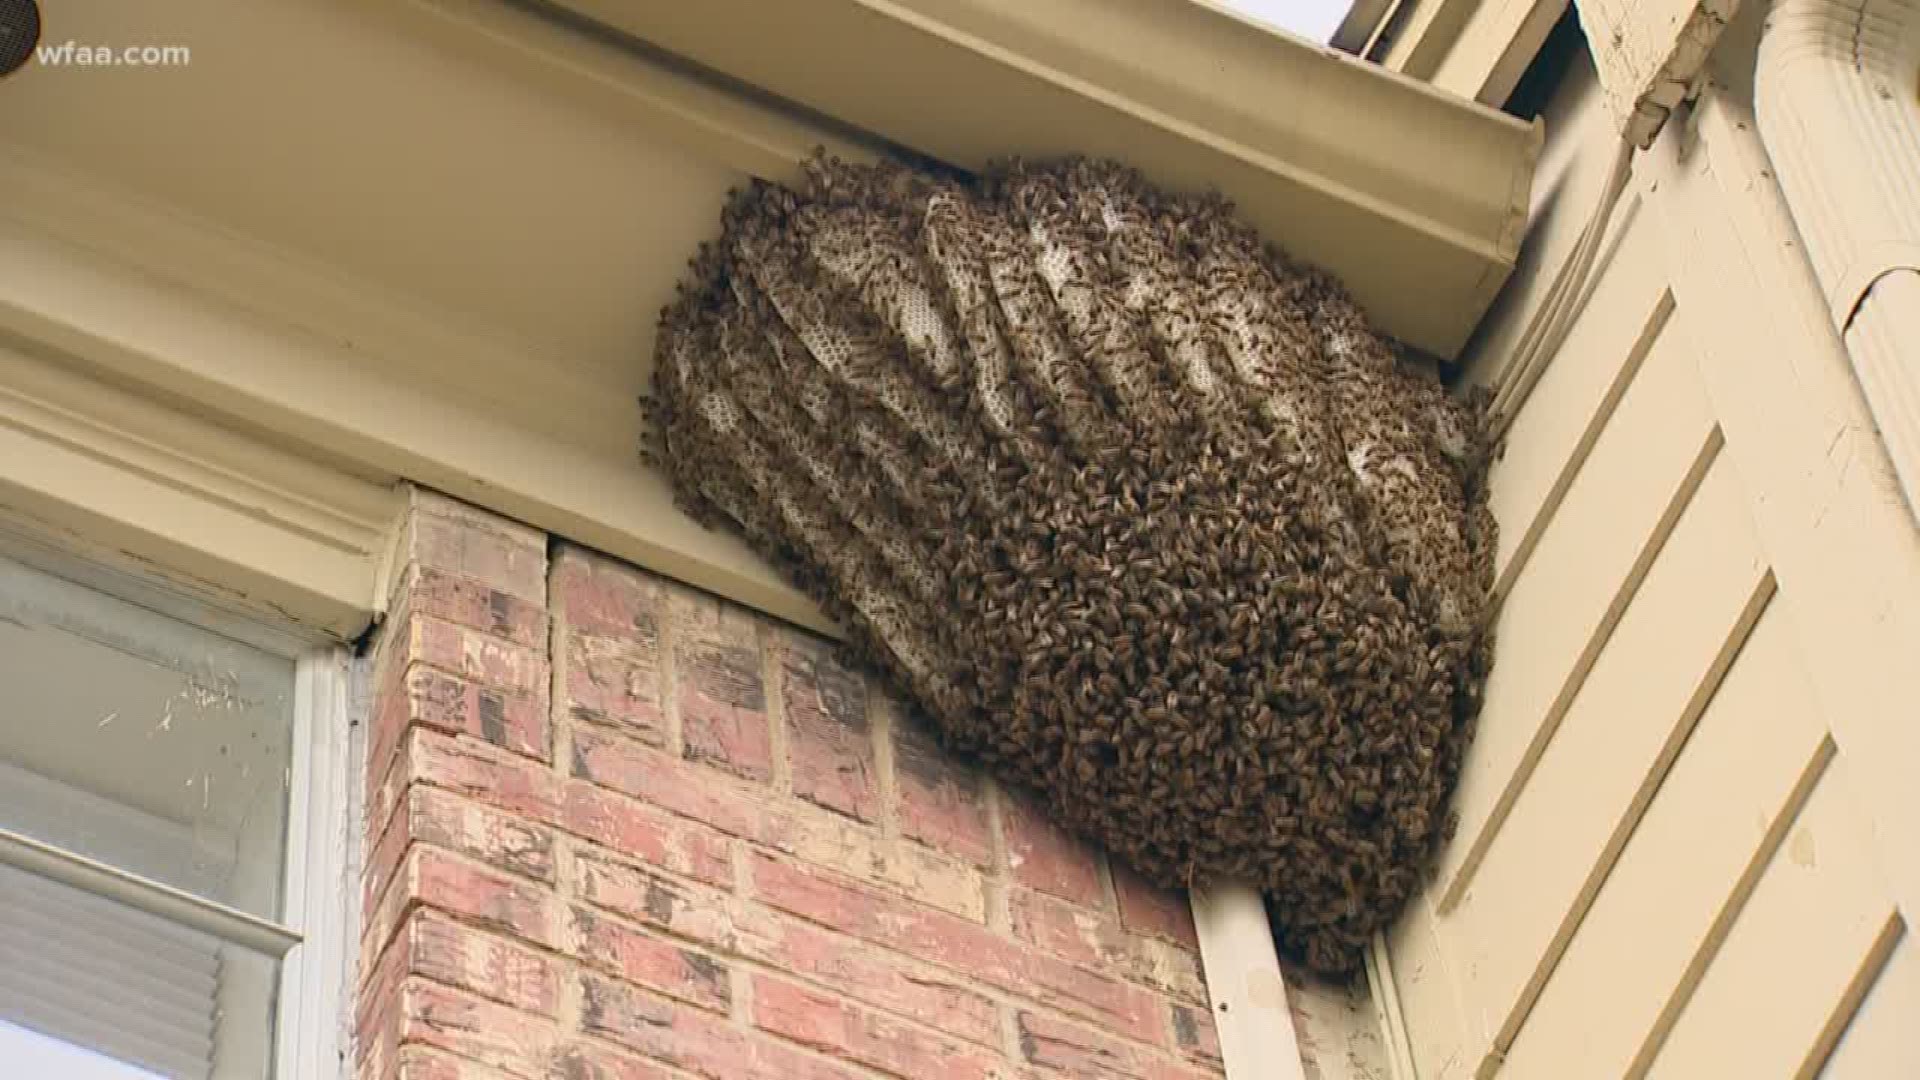 Bee colony invades southwest Dallas apartment